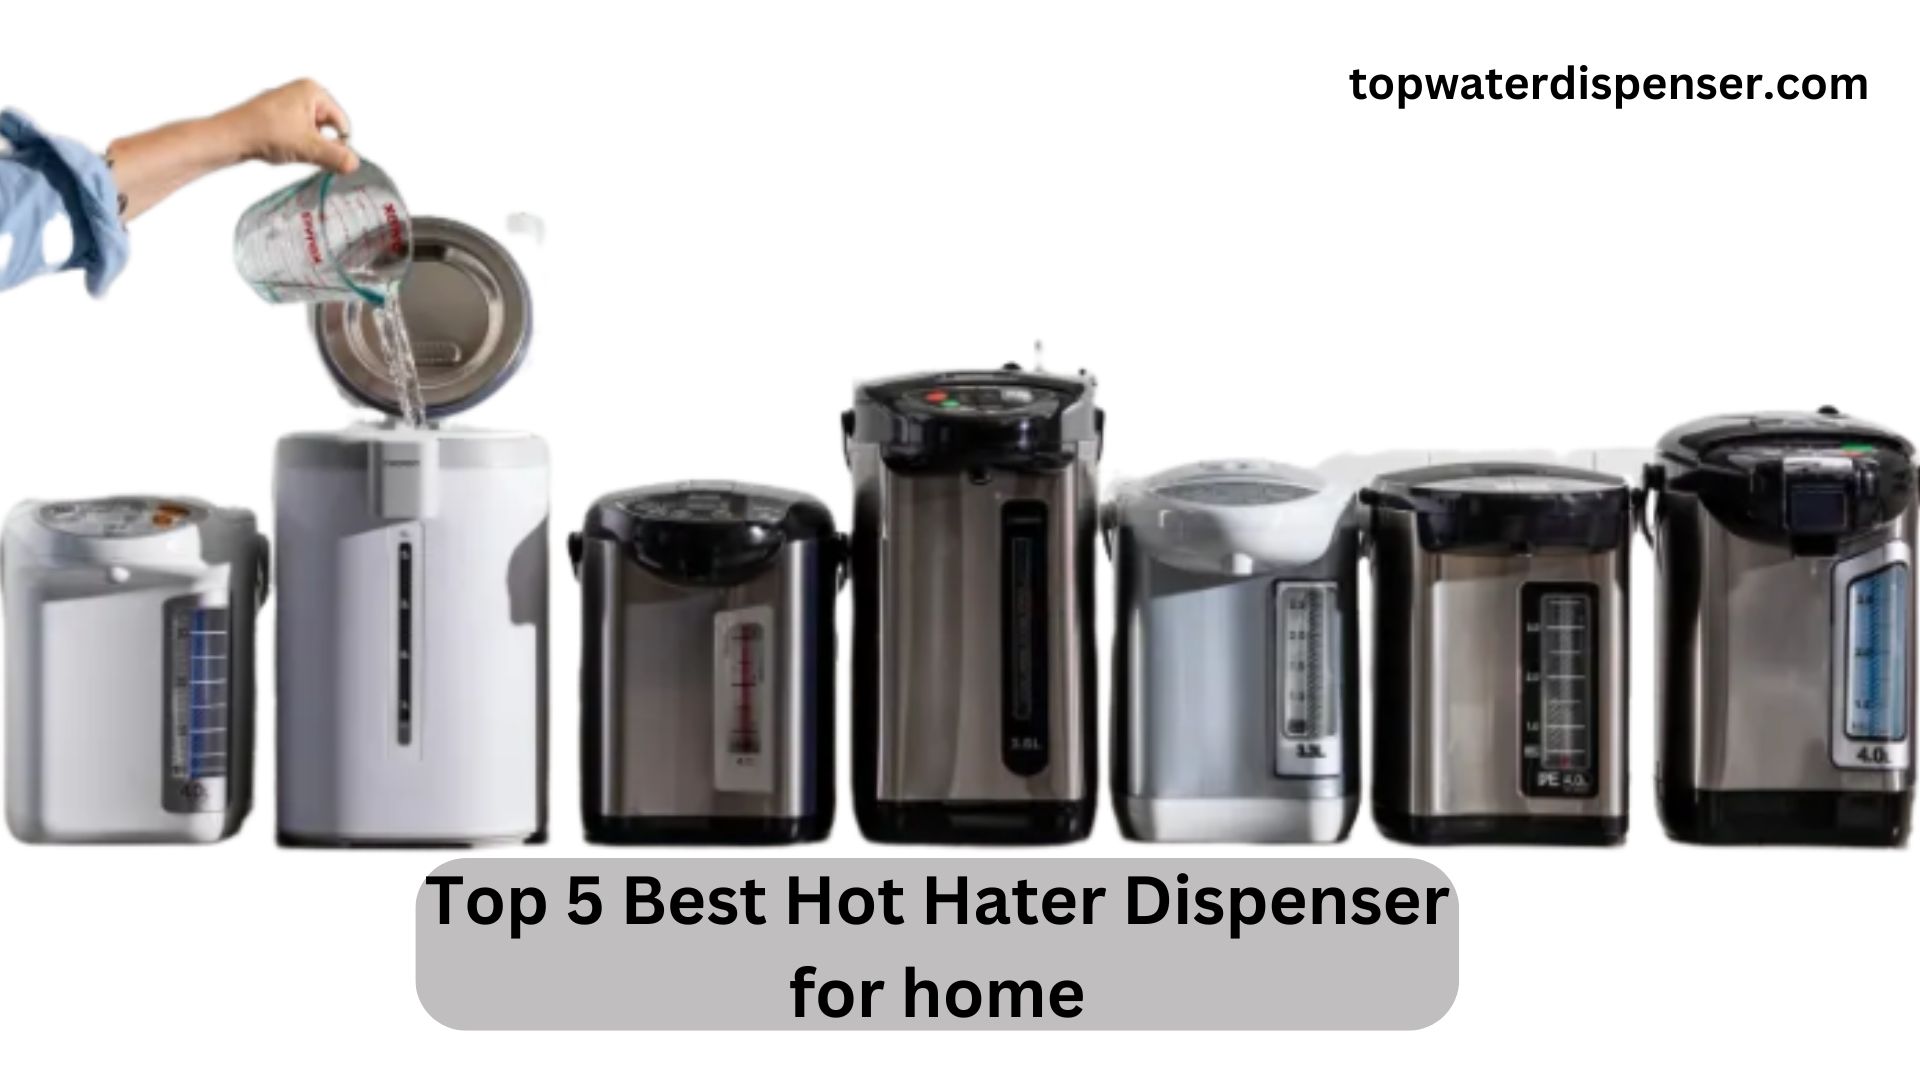 Top 5 Best Hot Hater Dispenser for home